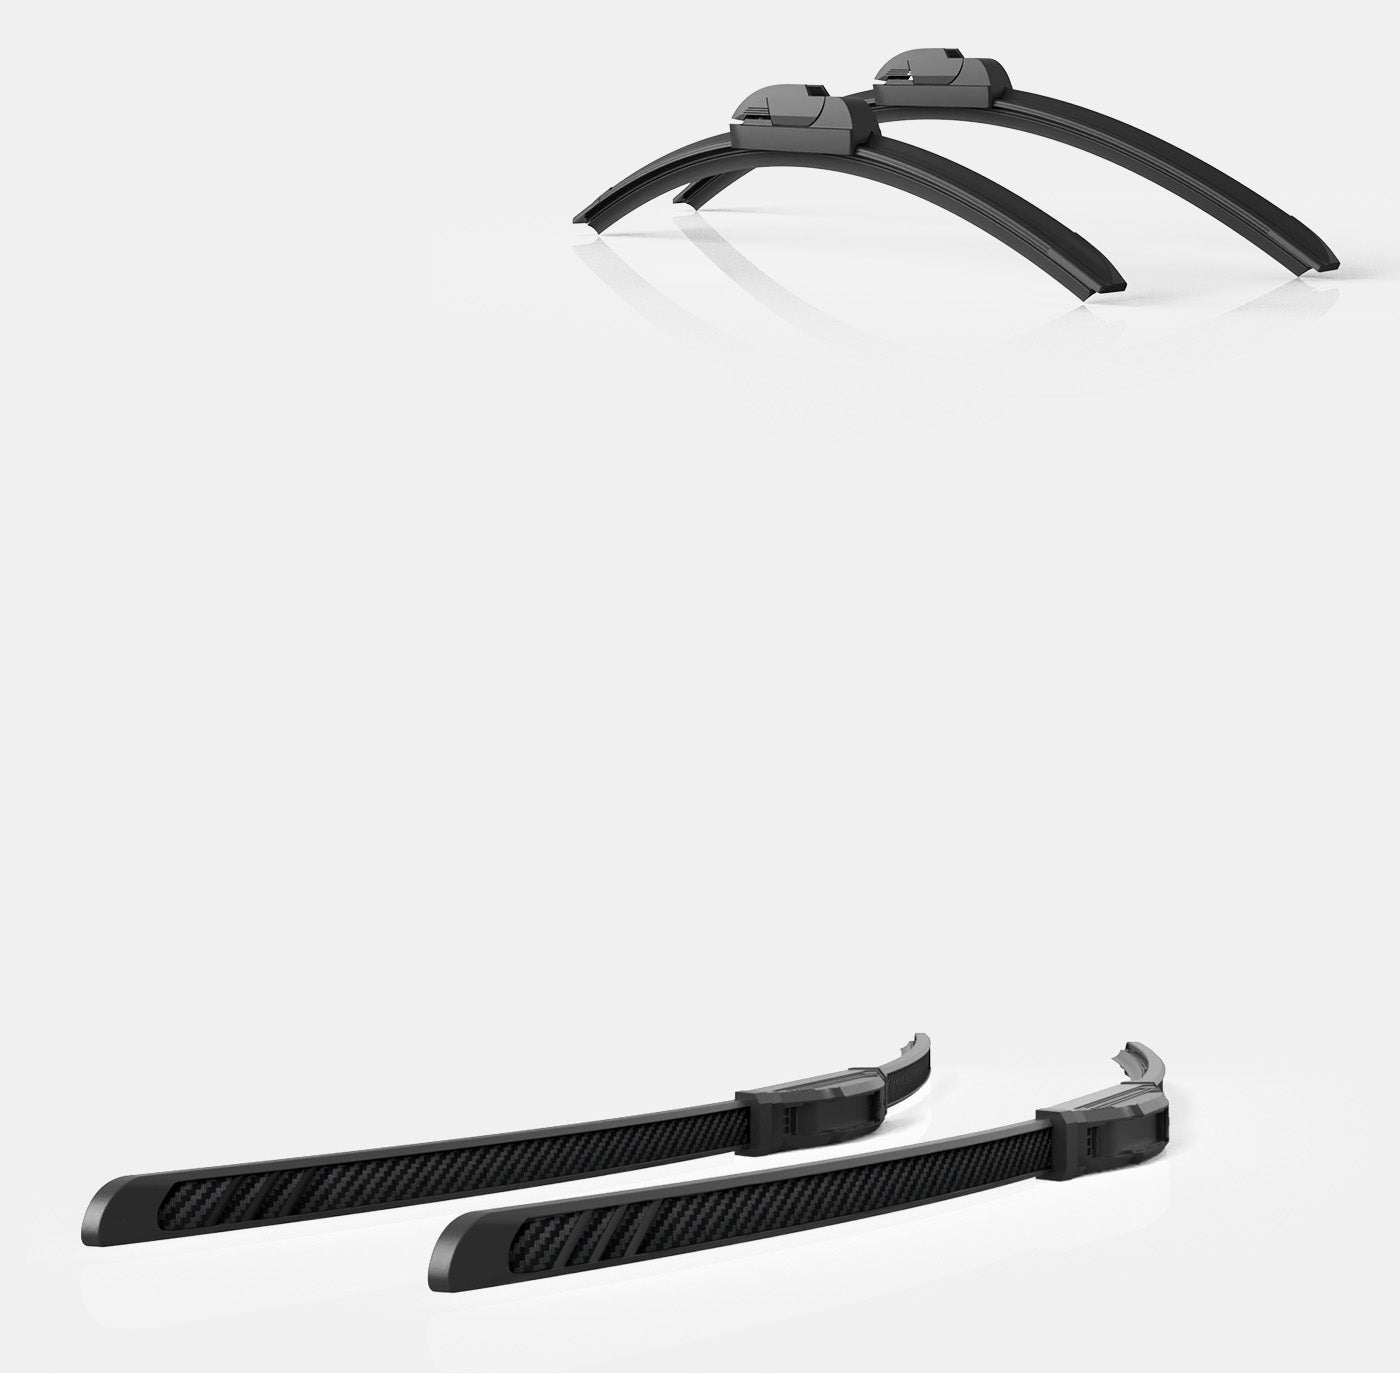 mega racer windshield wiper blades carbon fiber design all season wiper blades car accessories patented design